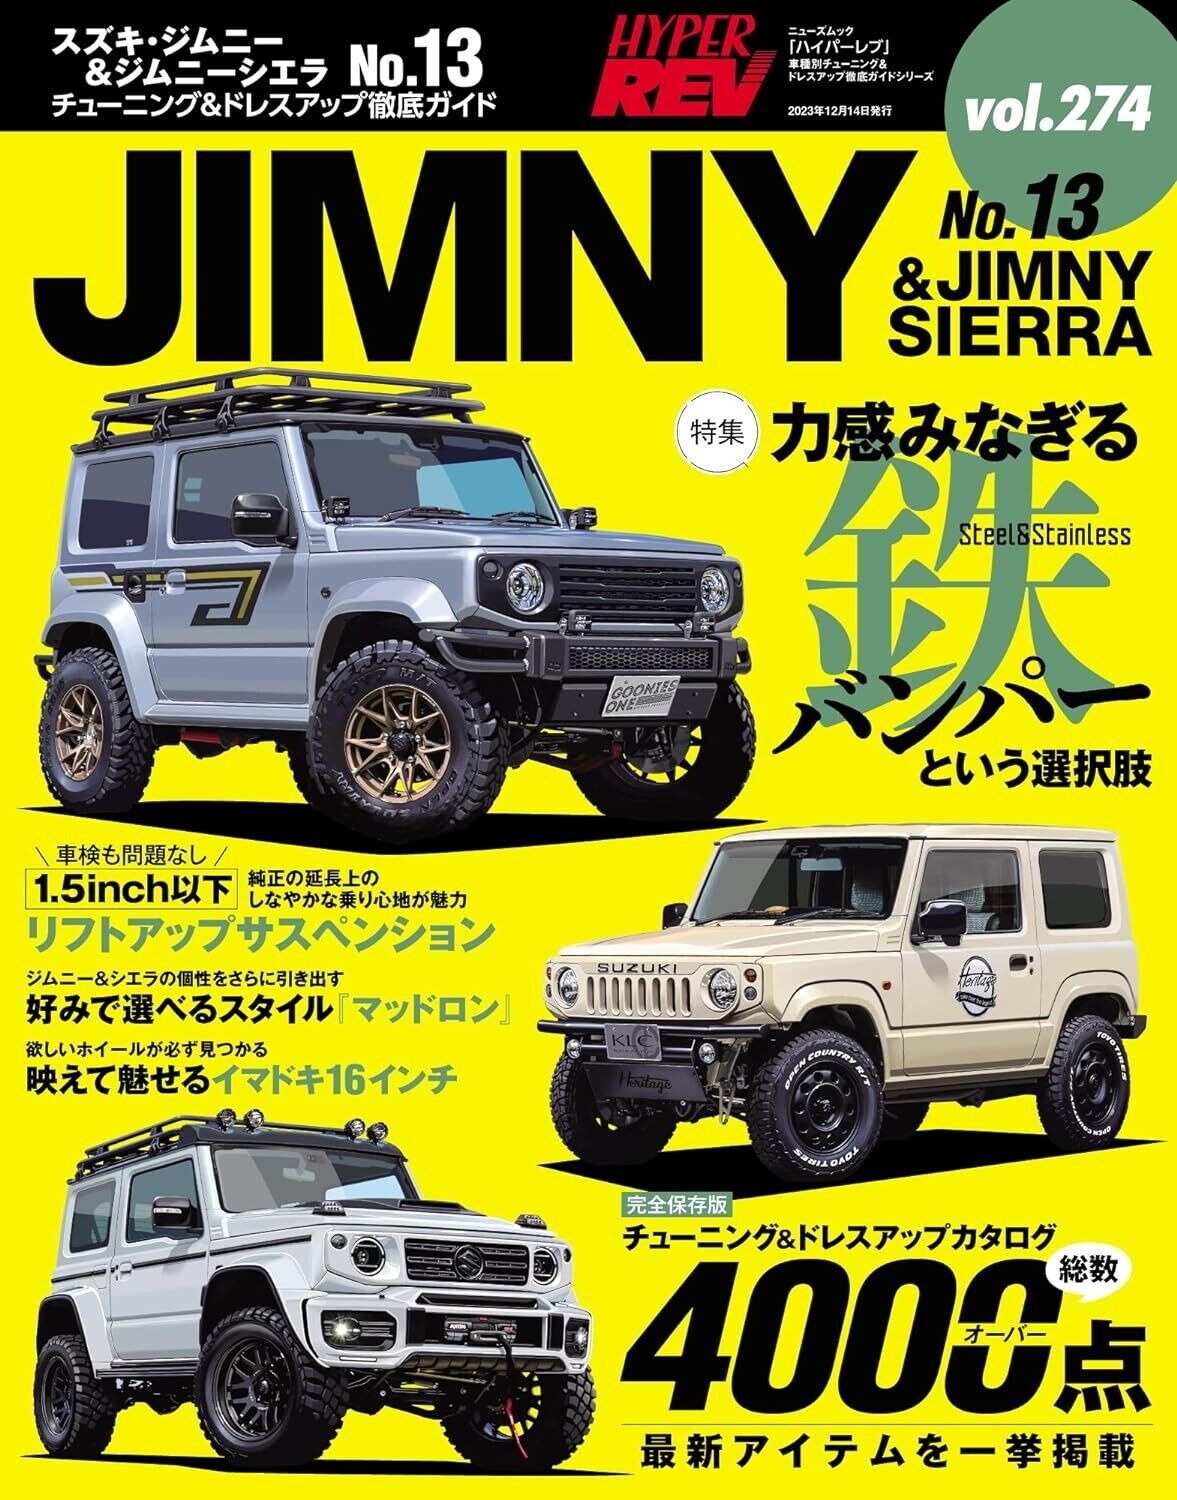 HYPER REV SUZUKI JIMNY & SIERRA No.13 Car Tuning Dress Up Guide Book | Japan